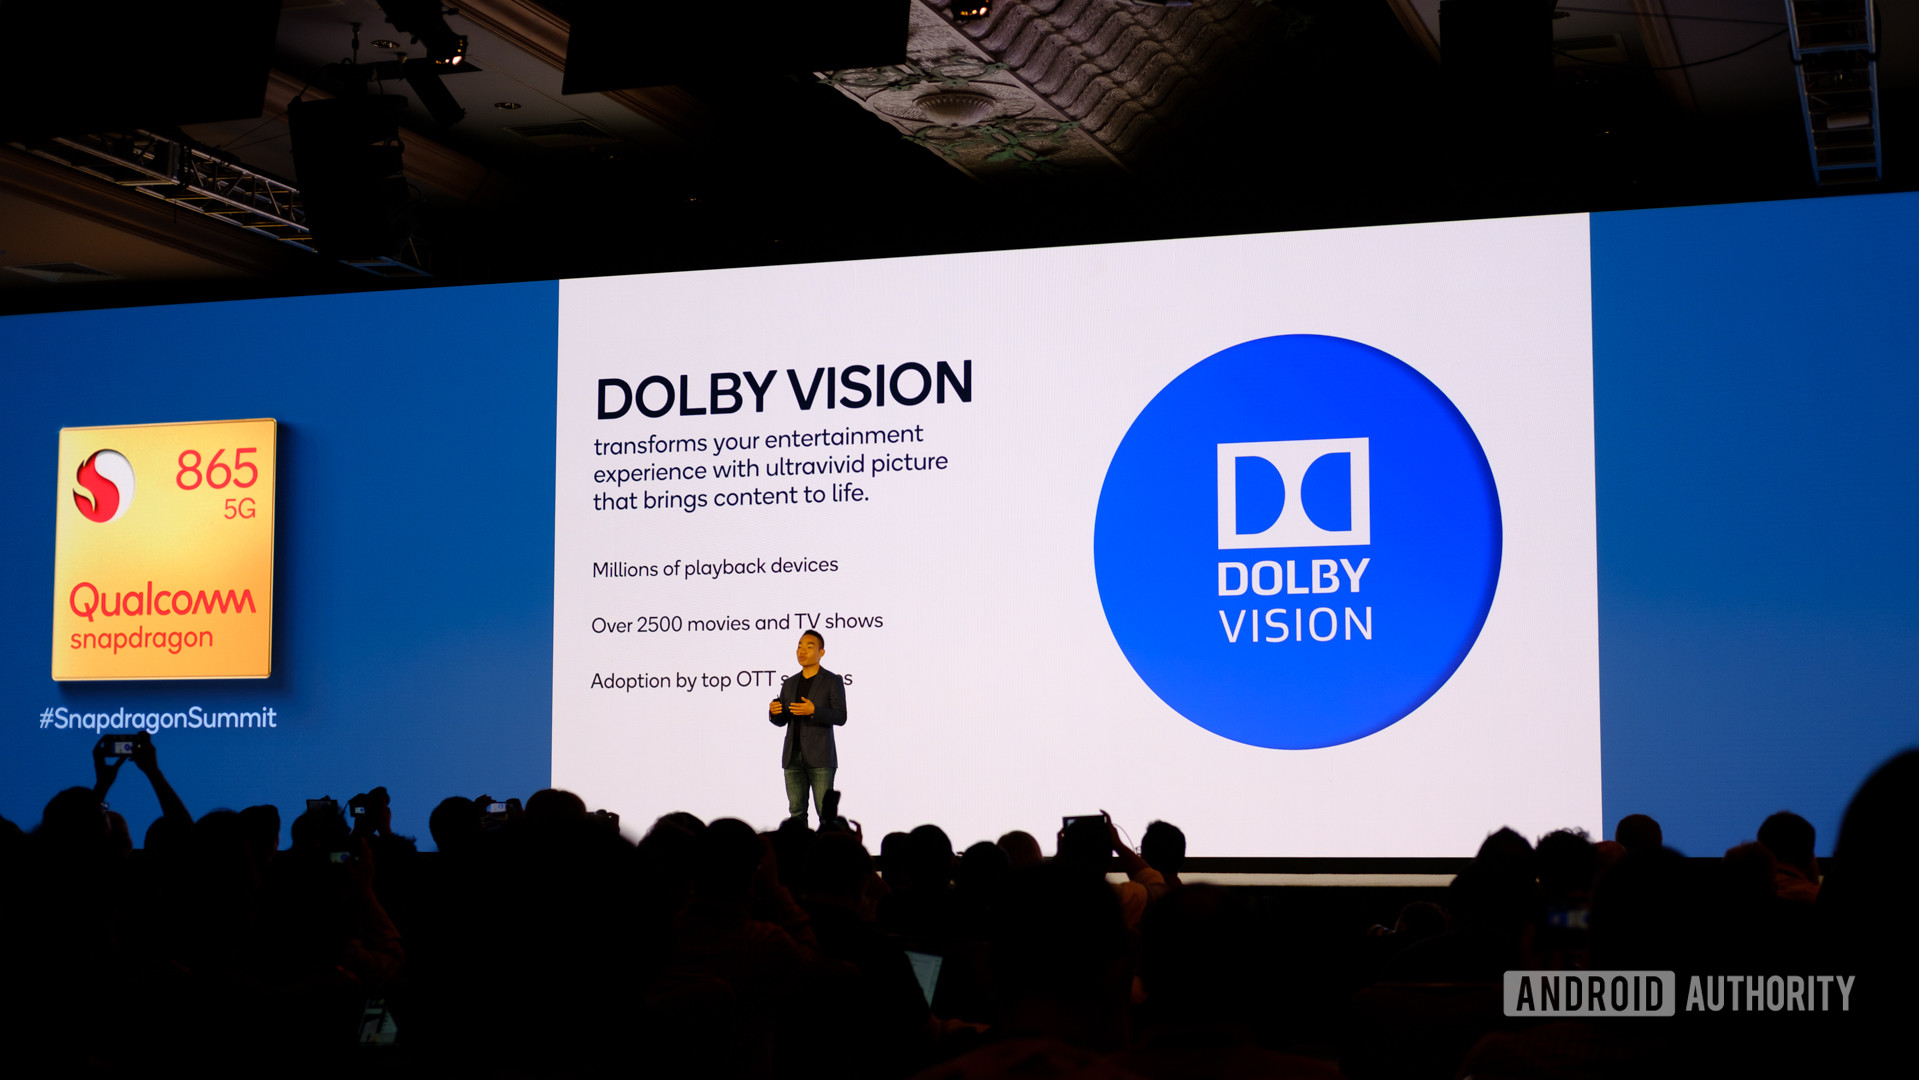 Qualcomm Snapdragon 865 Dolby Vision幻灯片